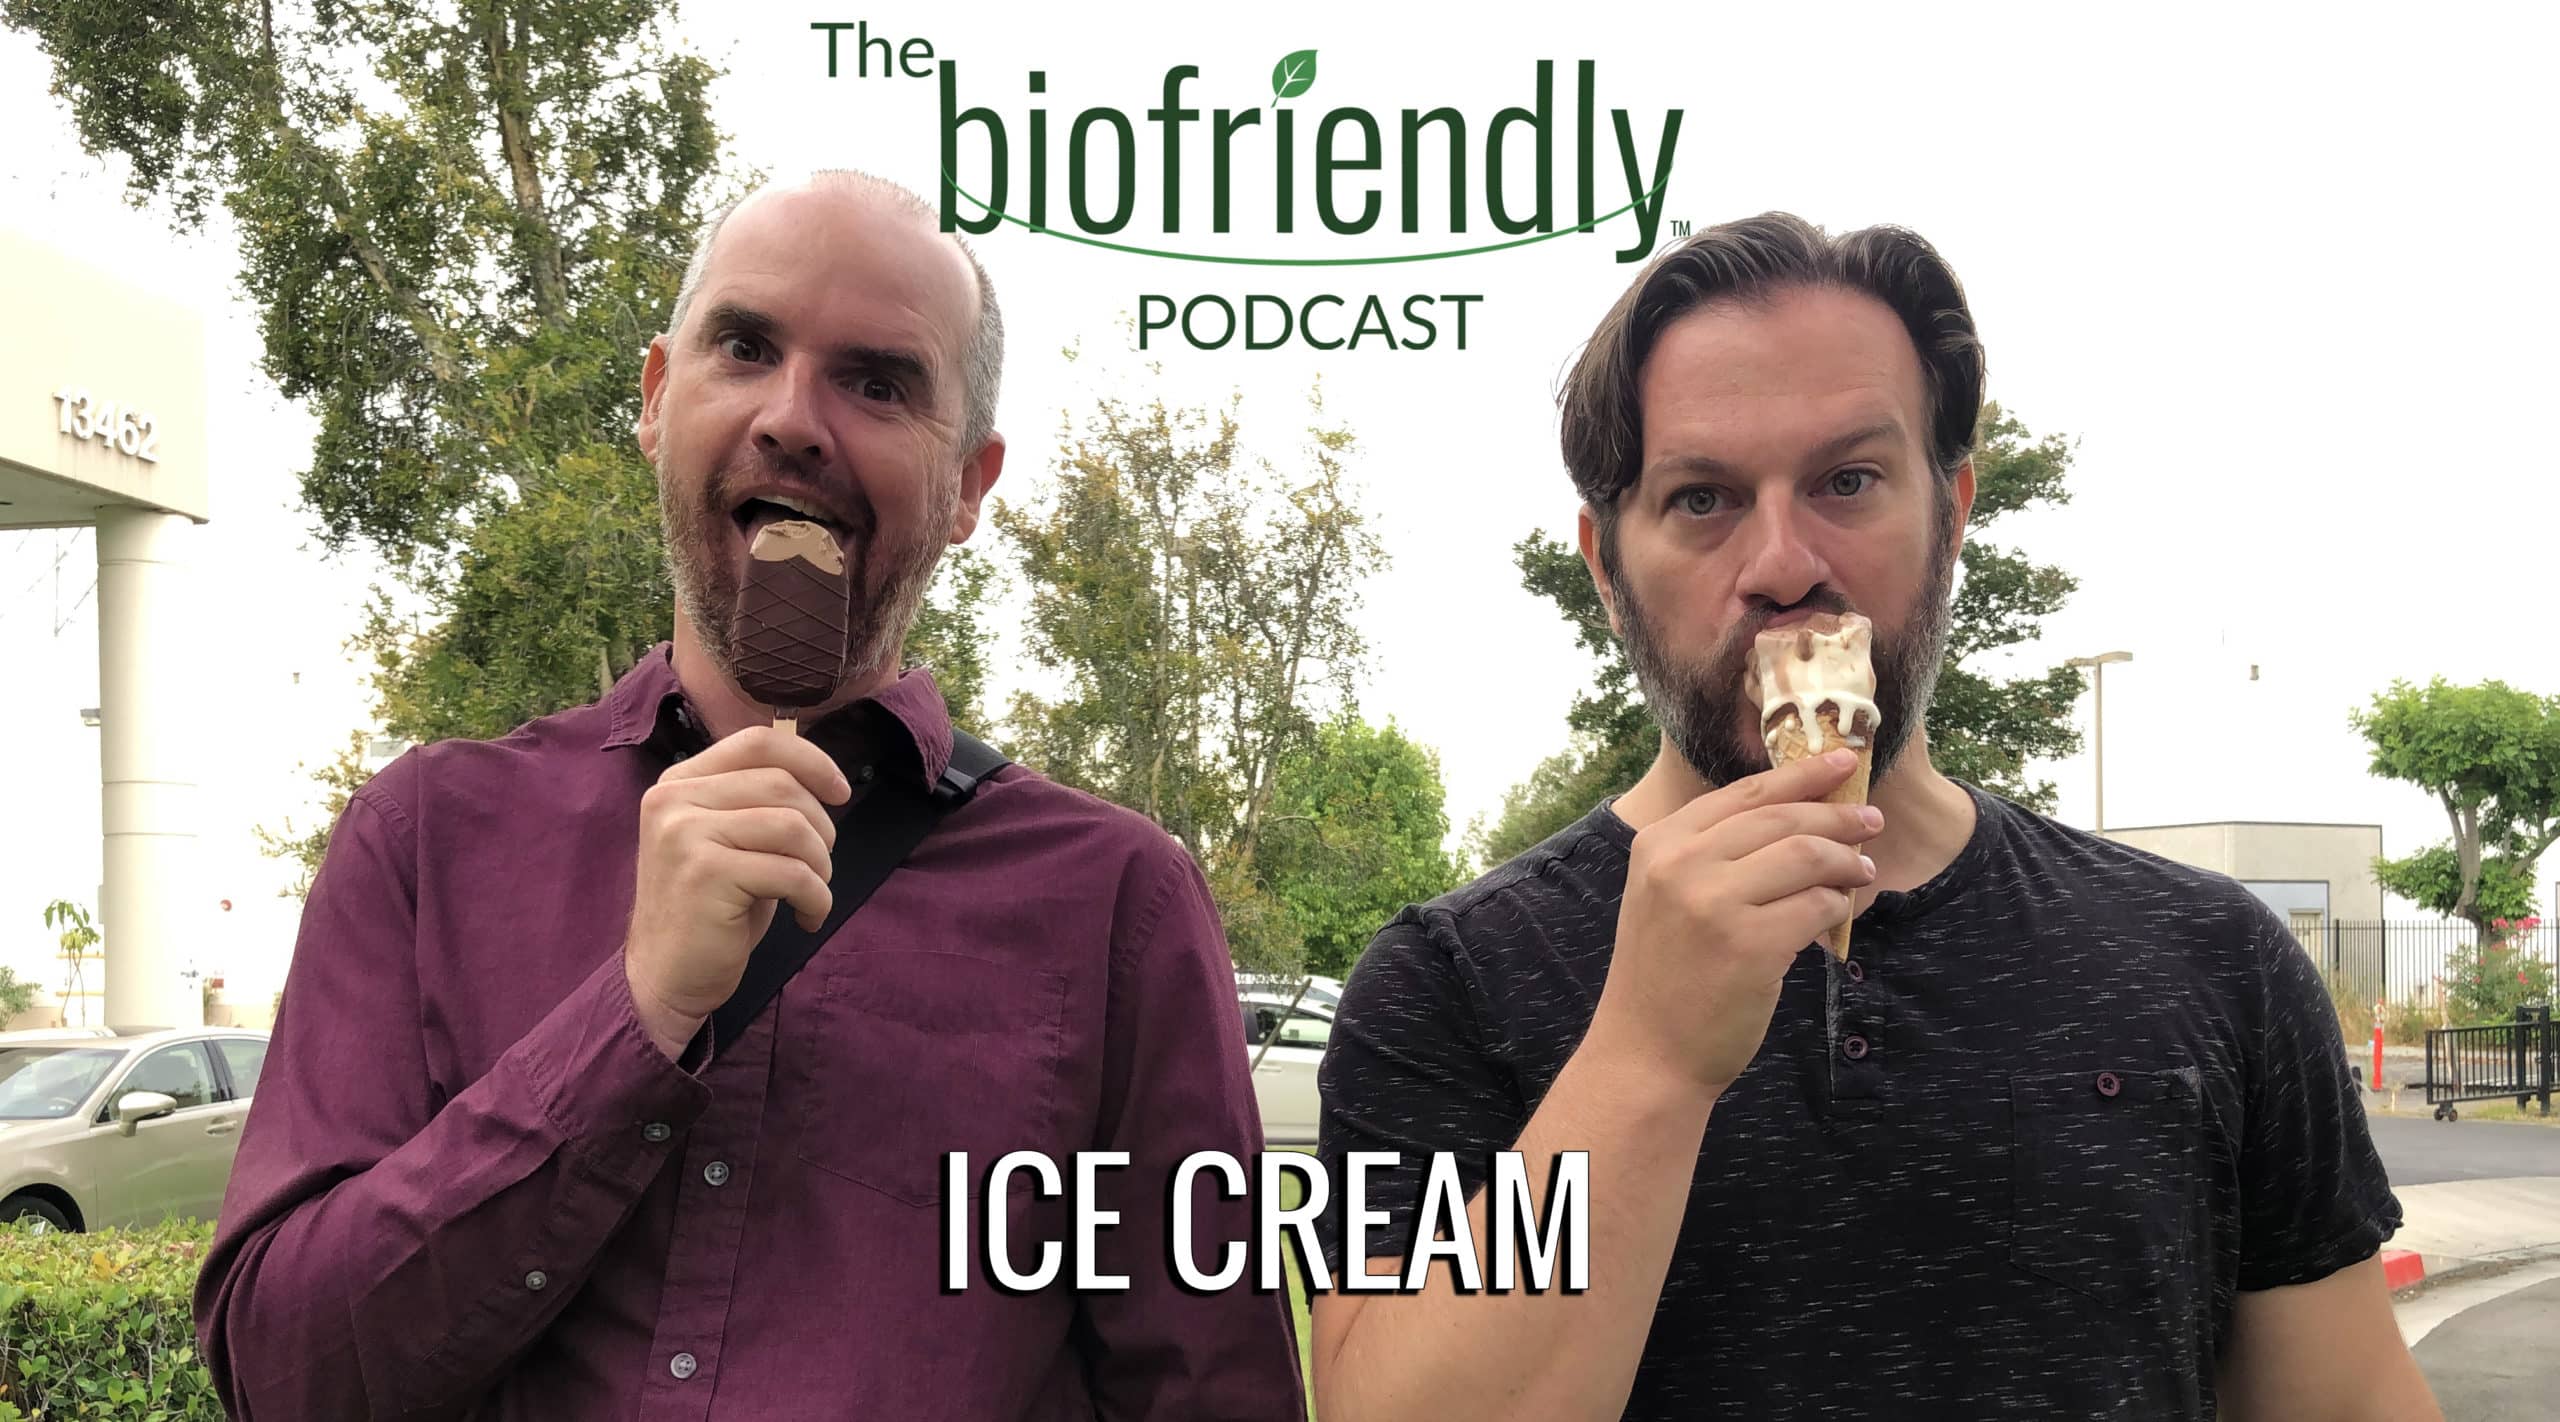 The Biofriendly Podcast - Episode 24 - Ice Cream